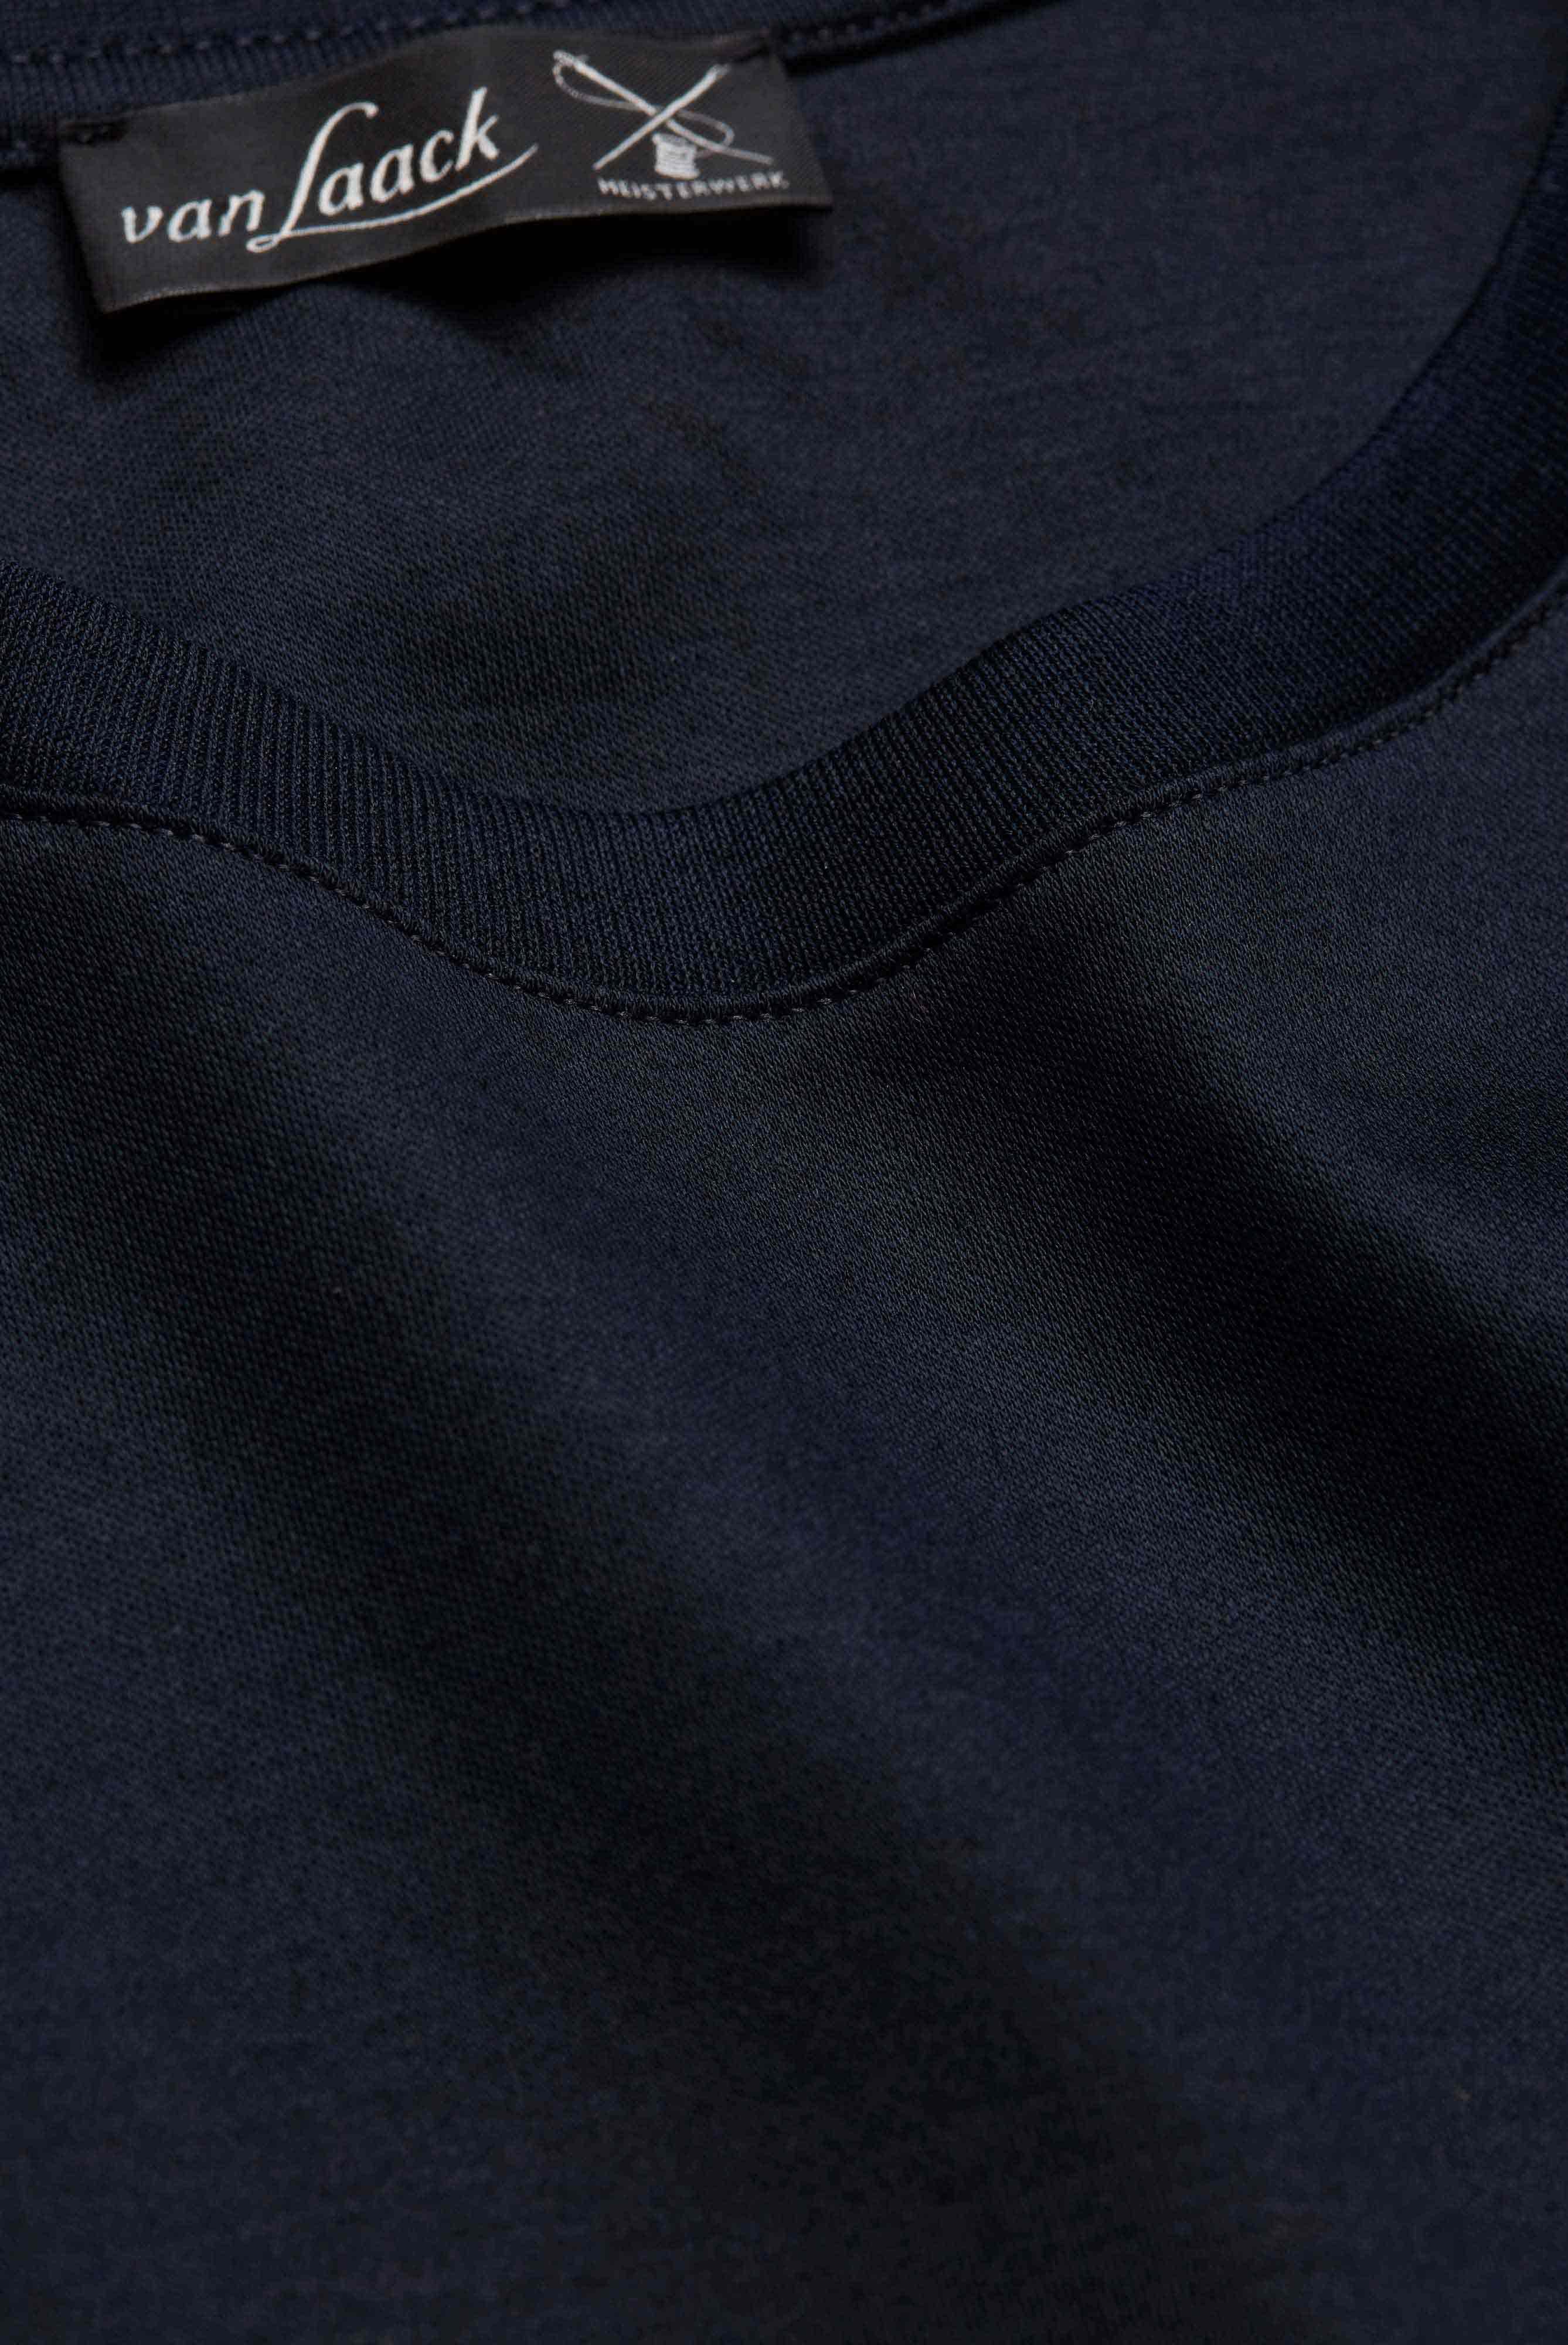 T-Shirts+Swiss Cotton Jersey Crew Neck T-Shirt+20.1717.UX.180031.790.XL